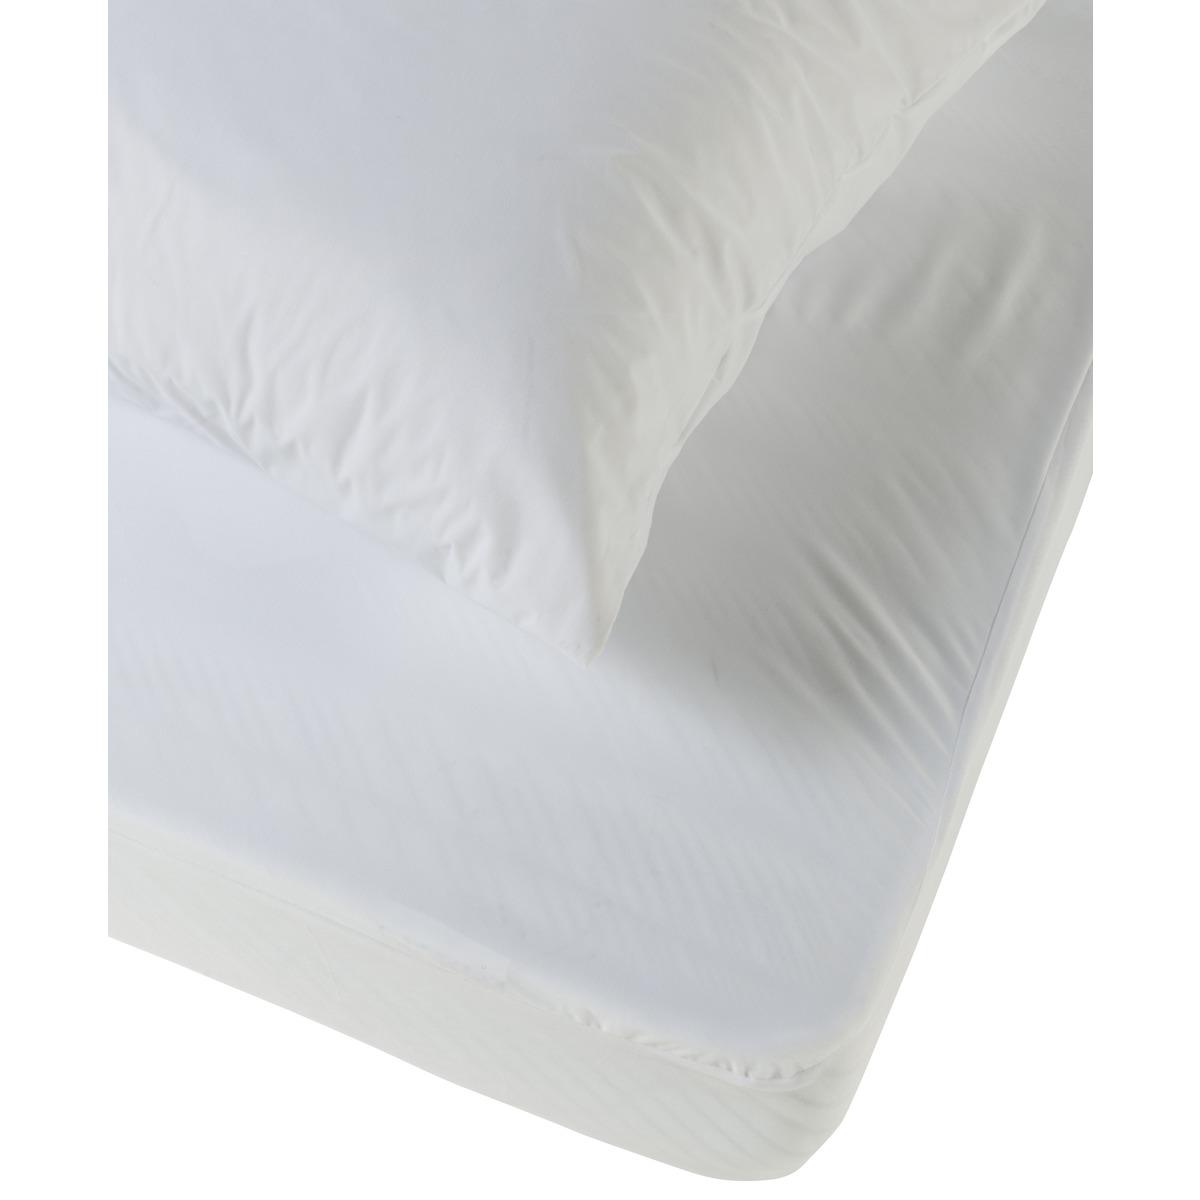 Protège-matelas imperméable + 1 protège-oreiller offert - 90 x 190 cm - blanc